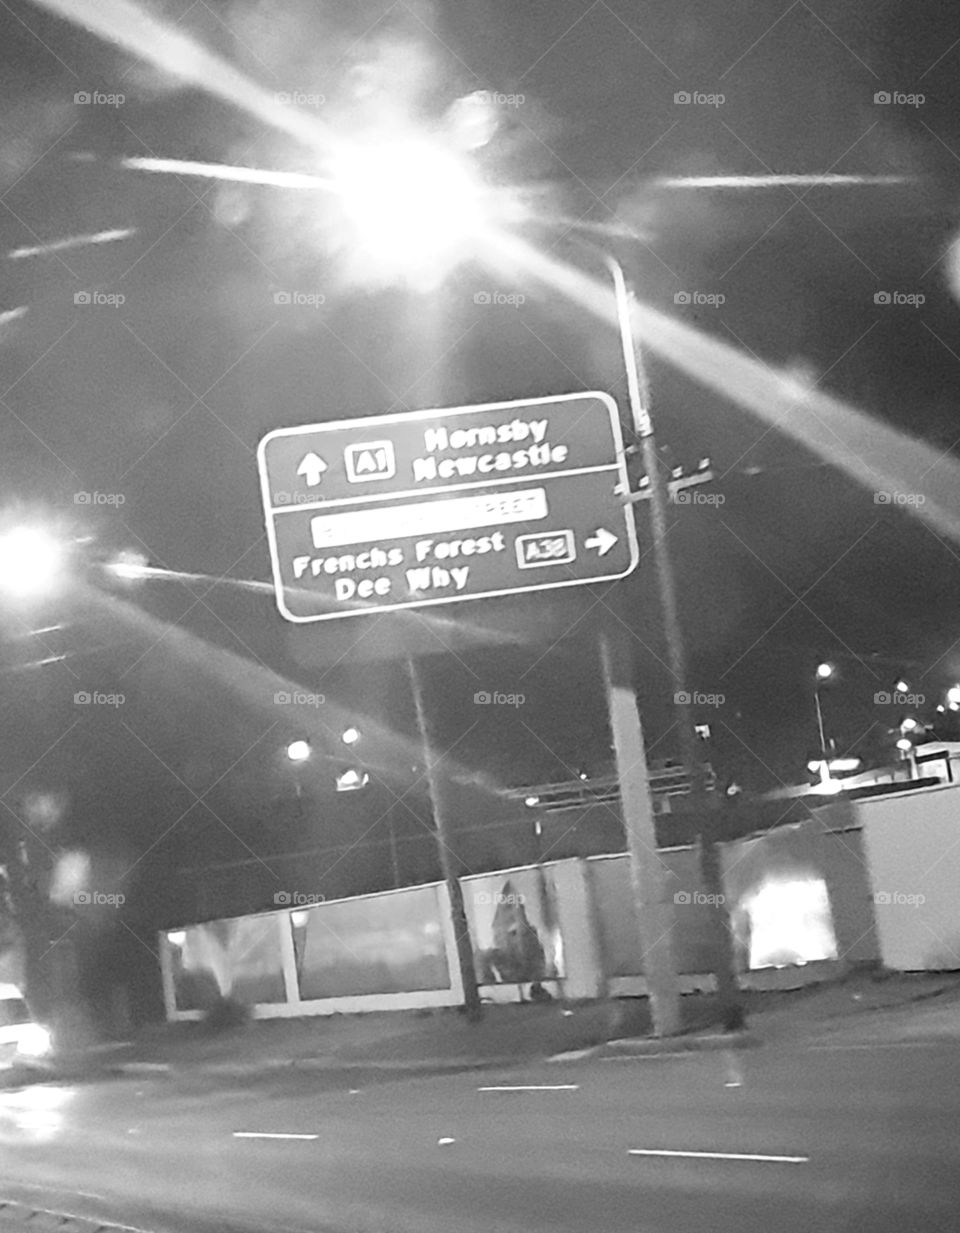 A1, Sydney, N.s.w. which way should I go